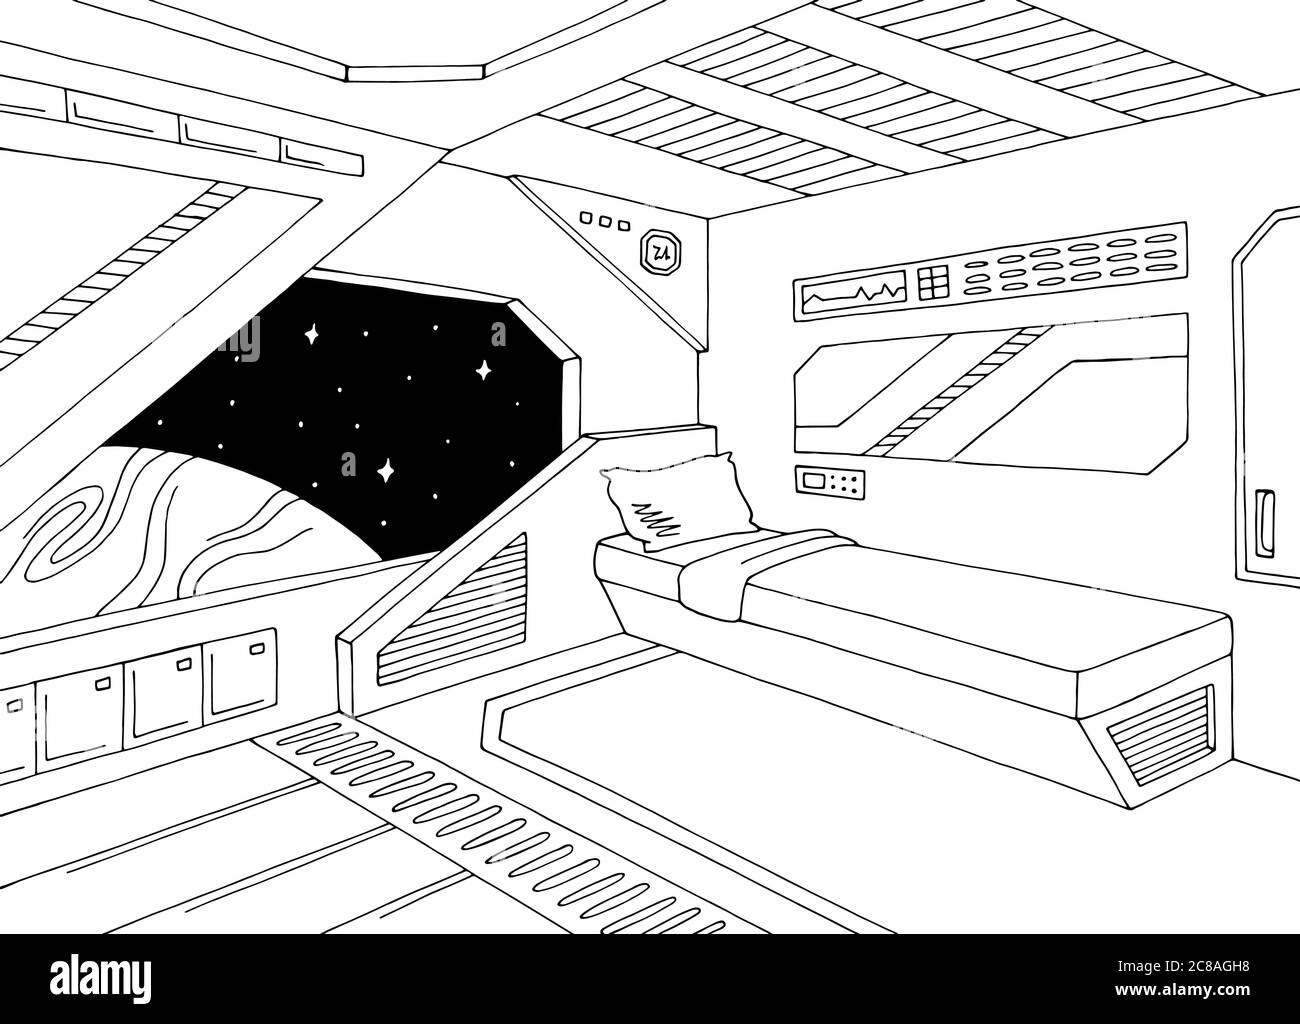 Spaceship interior cabin graphic black white sketch illustration vector  Stock Vector Image & Art - Alamy